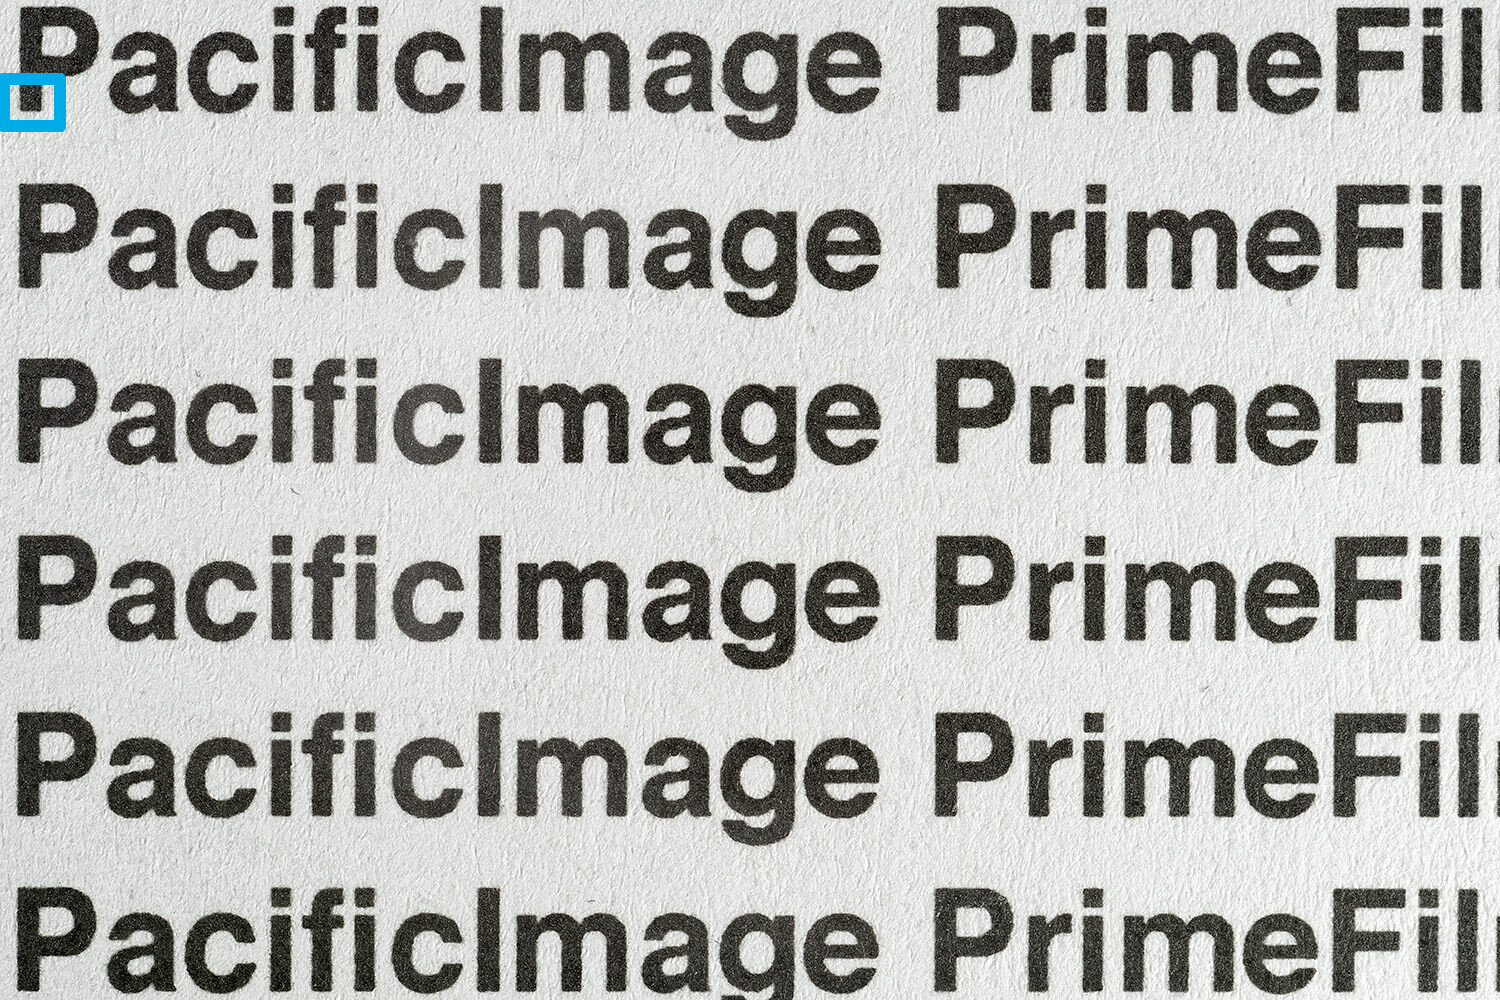 Pacific Image PrimeFilm XA Plus Film Scanner. 35mm Film & Slide Scanner.  Auto Roll Film and Film Strip Scanning. Auto Focus. 10000 dpi / True Color.  4.2 Dynamic Range. Mac/Pc. 